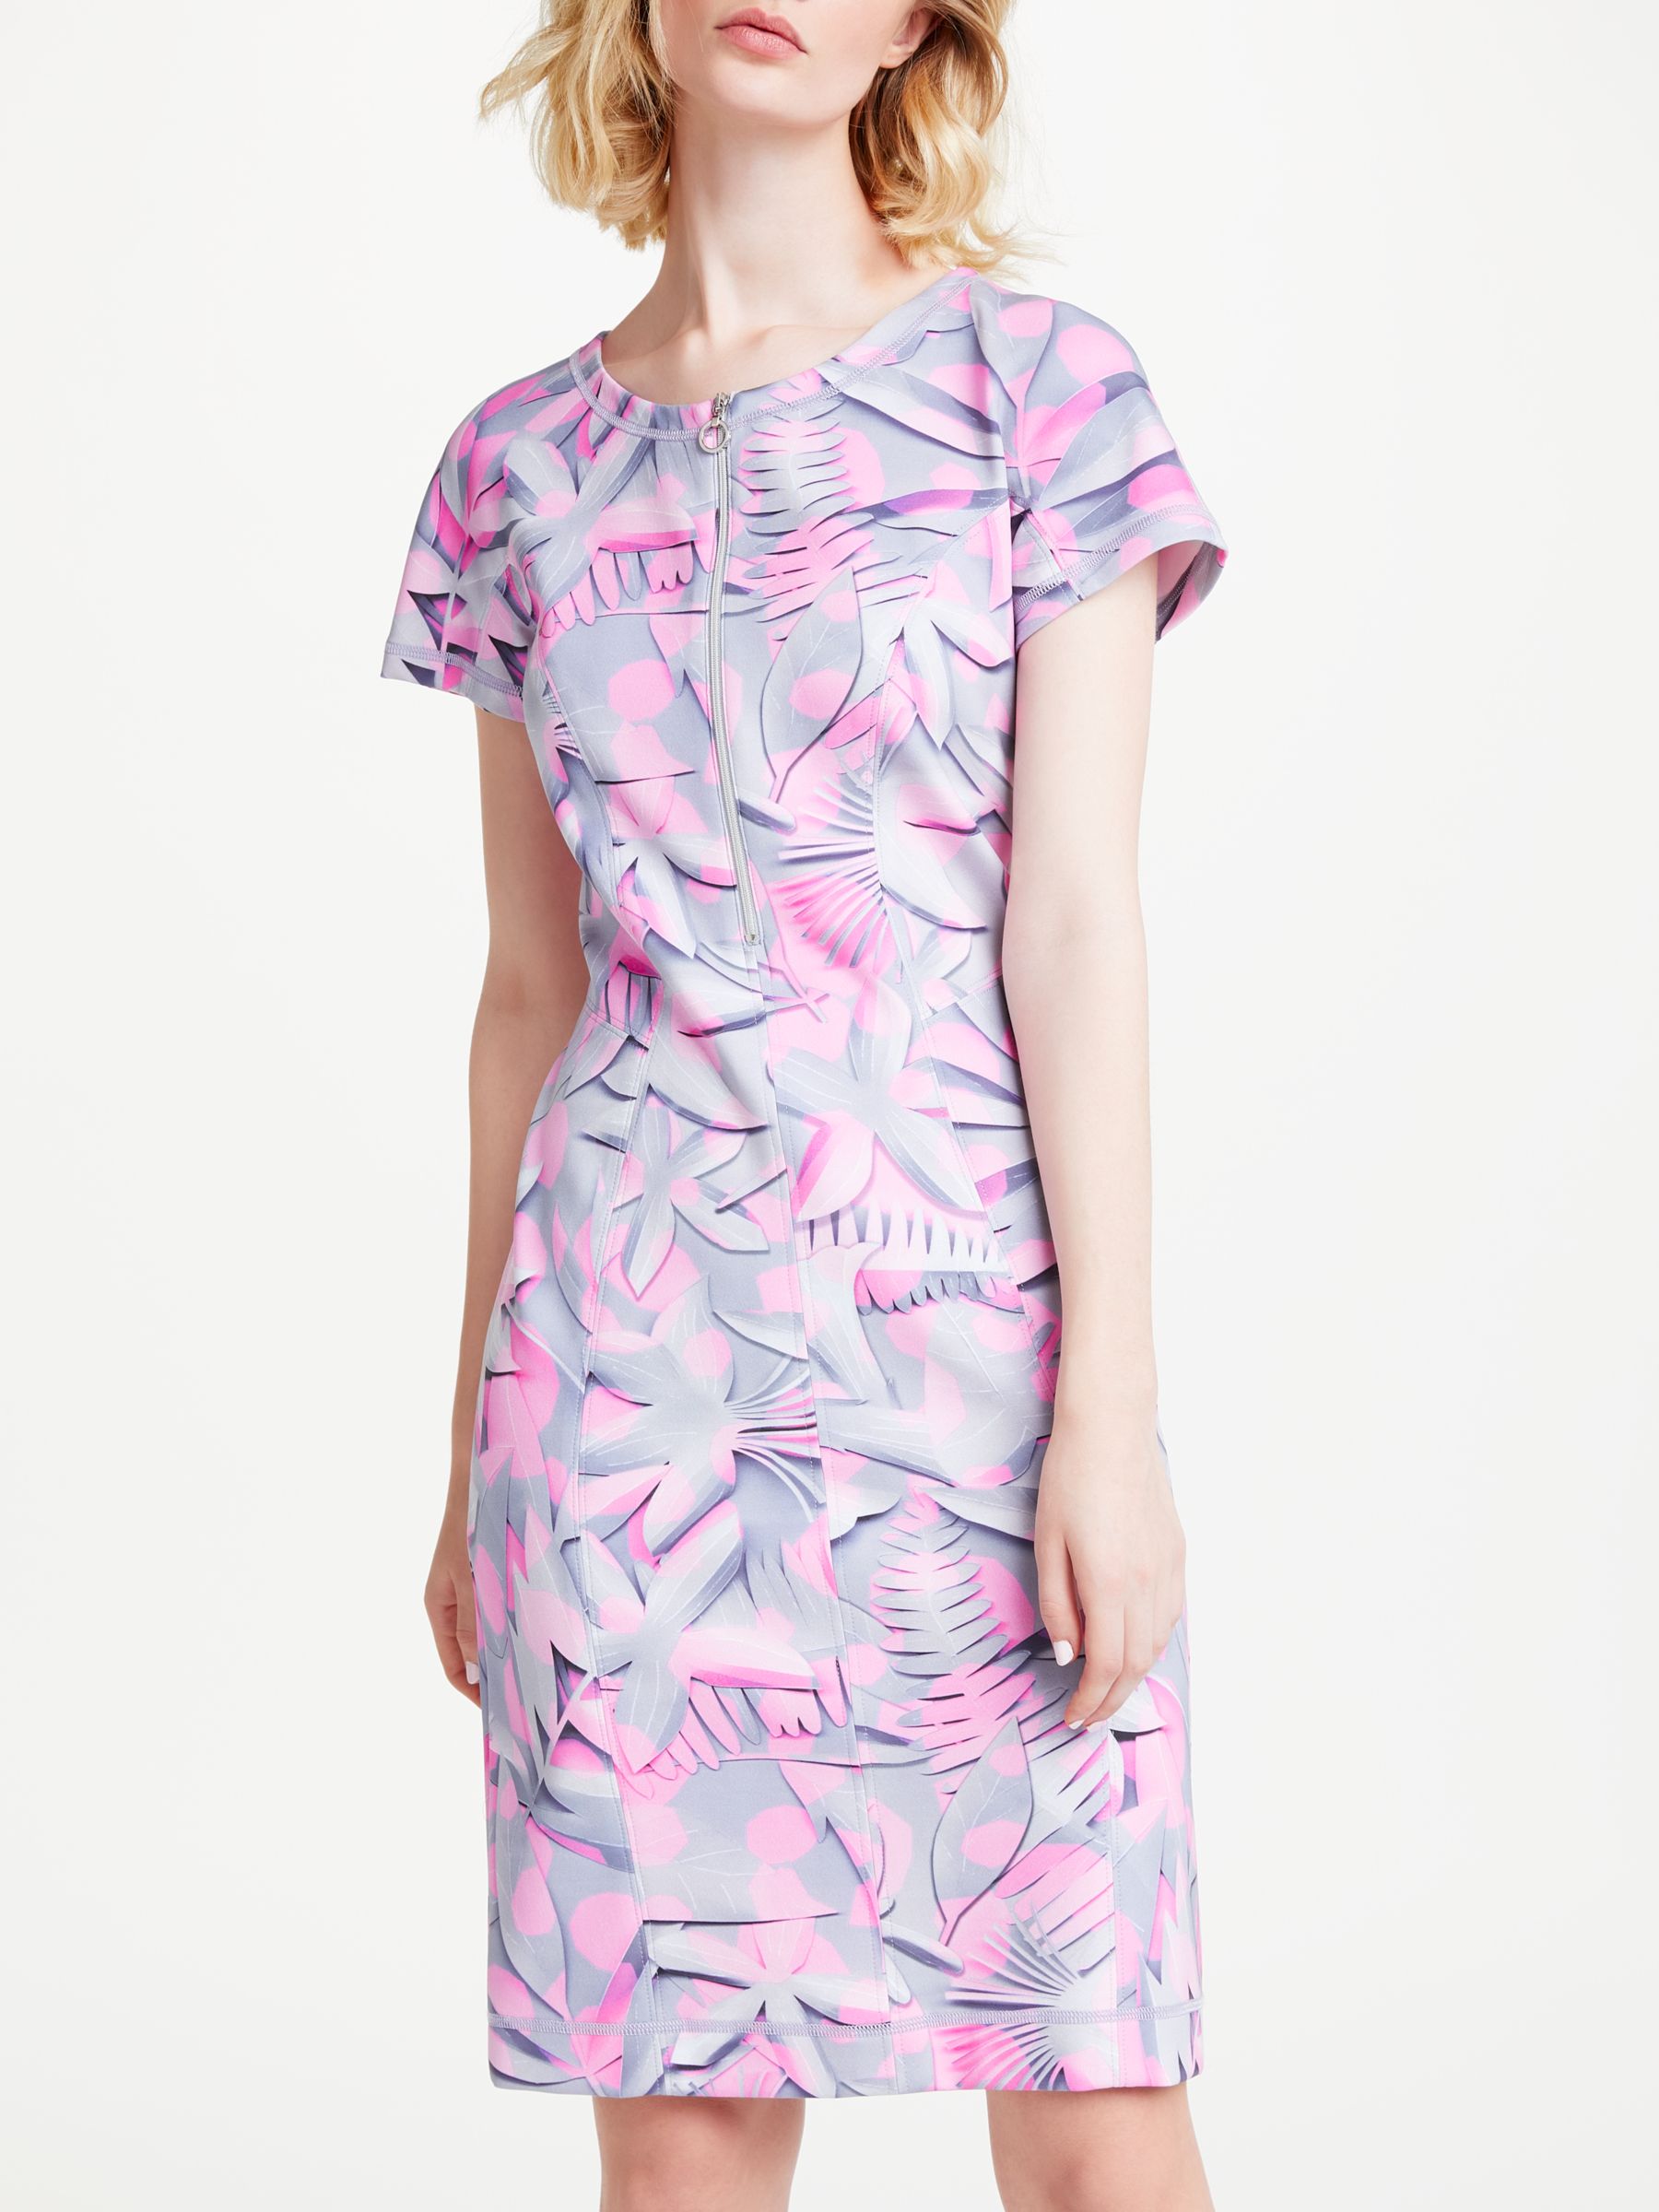 Marc Cain Printed Bodycon Neoprene Dress, Pink/Grey